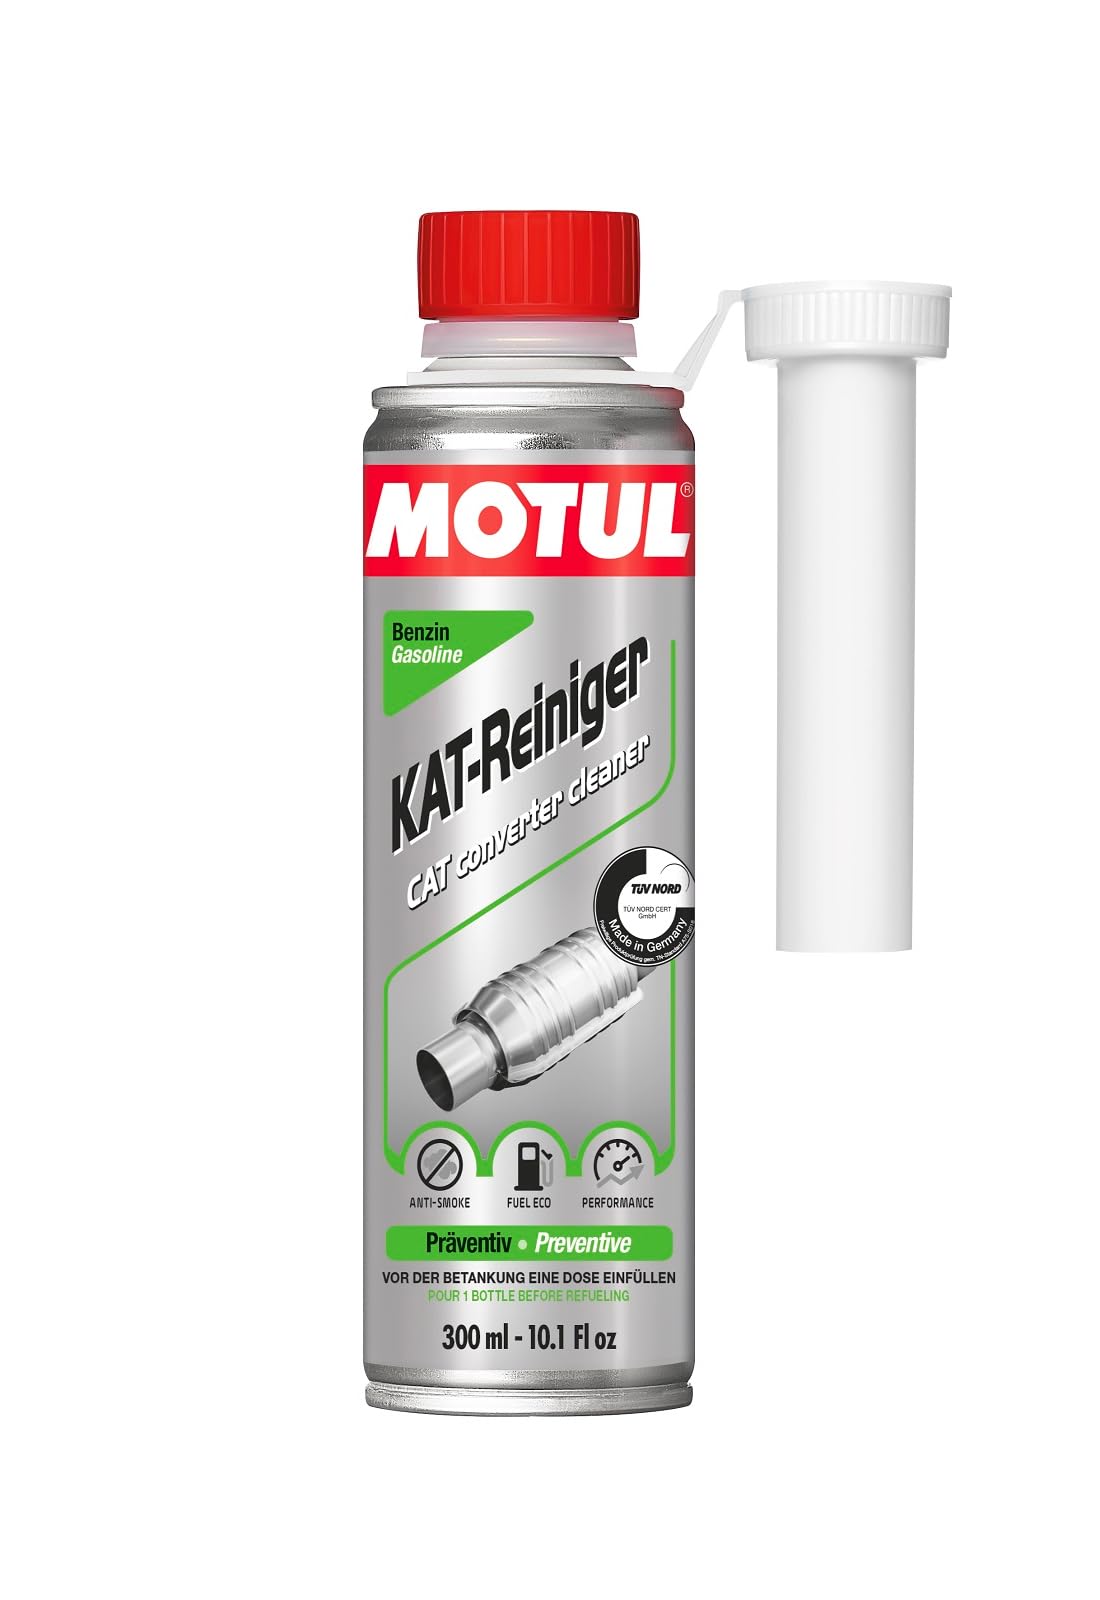 MOTUL 300 ml Katalysator-Reiniger KAT Benzin Fahrzeugkatalysator Systemreiniger | 110678 | Regelmäßige Anwendung gewährleistet den Schutz des Katalysators von Motul